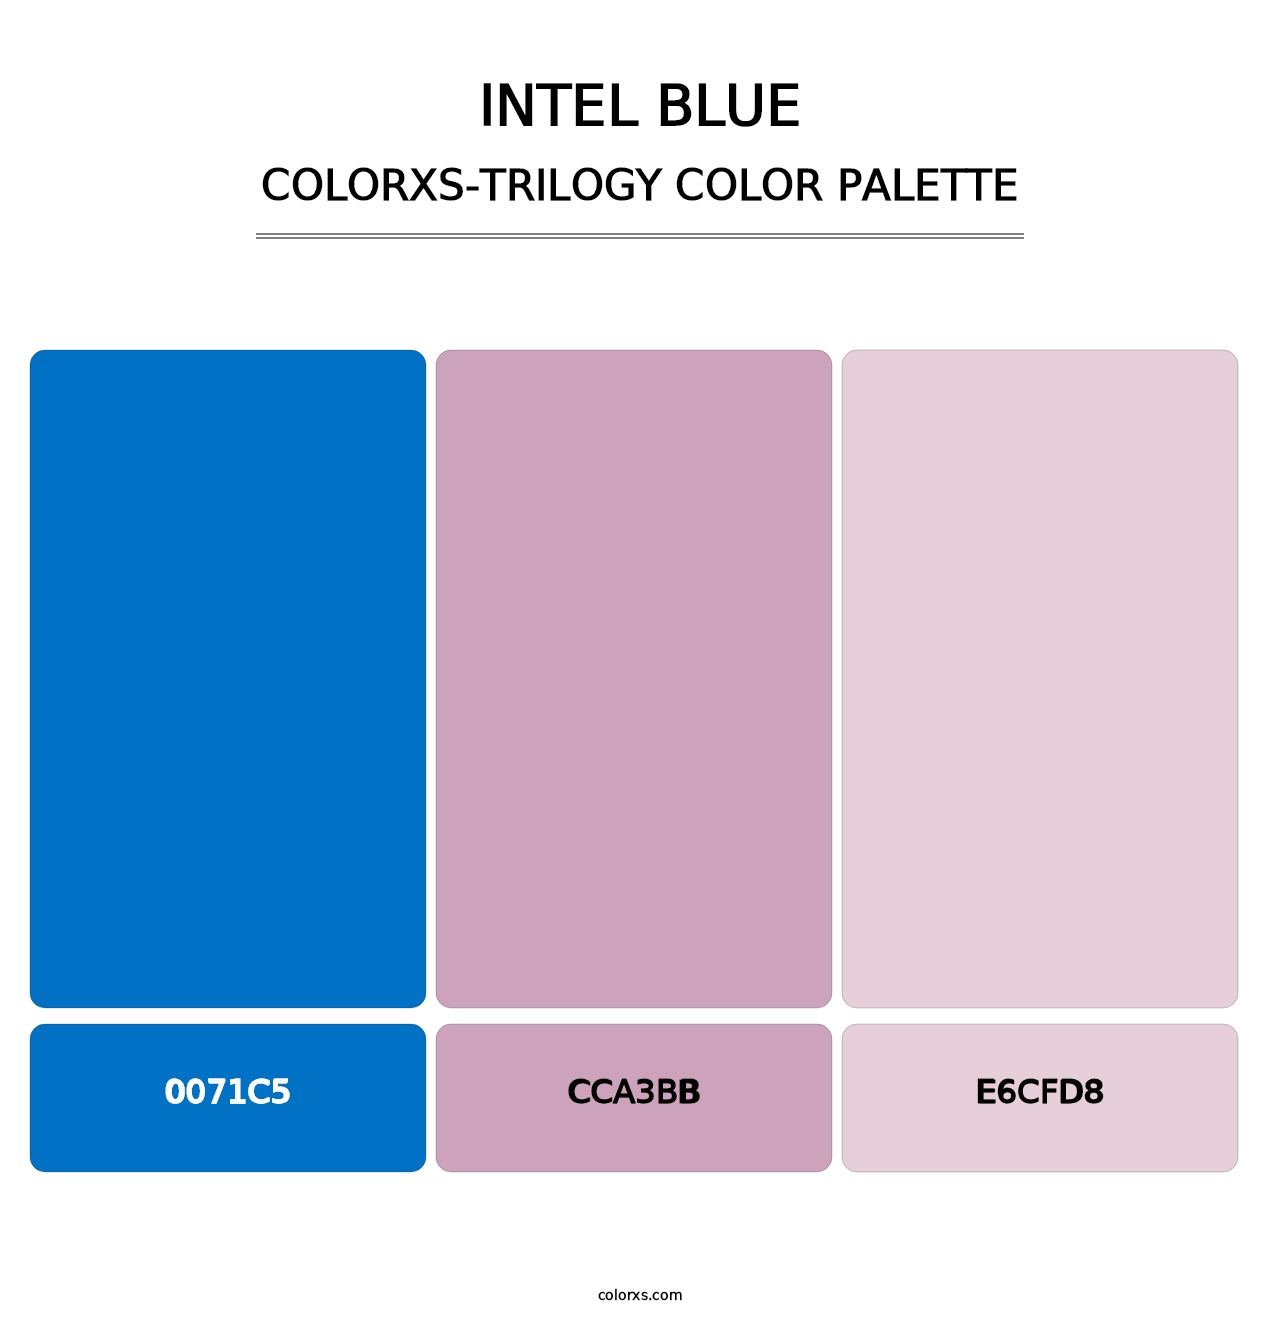 Intel Blue - Colorxs Trilogy Palette